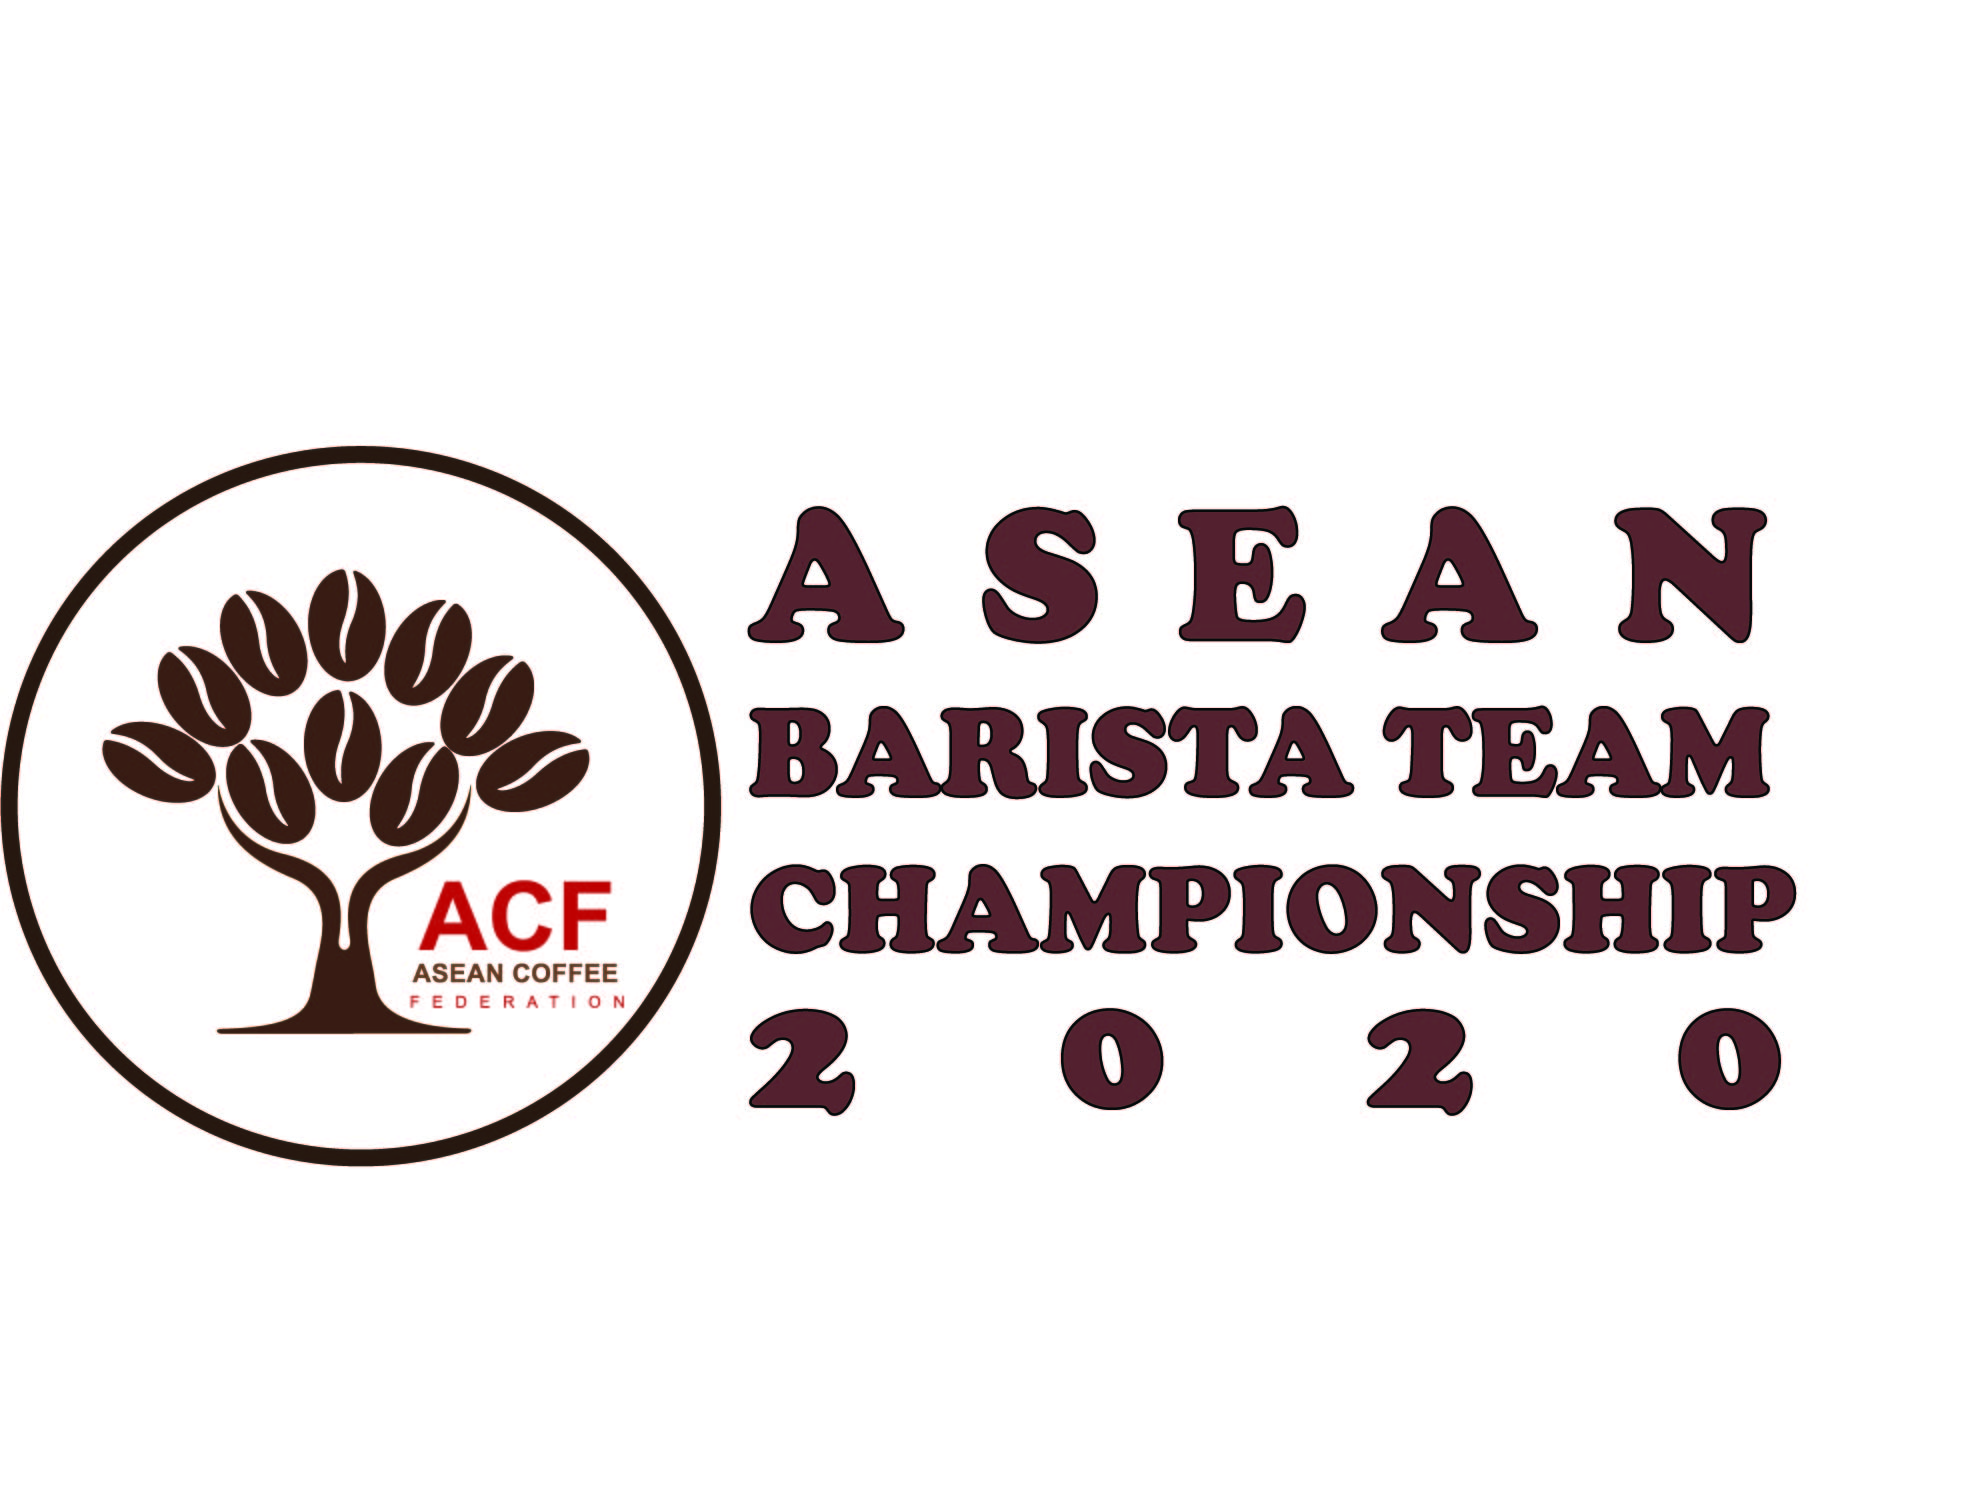 ASEAN Barista Team Championship 2019